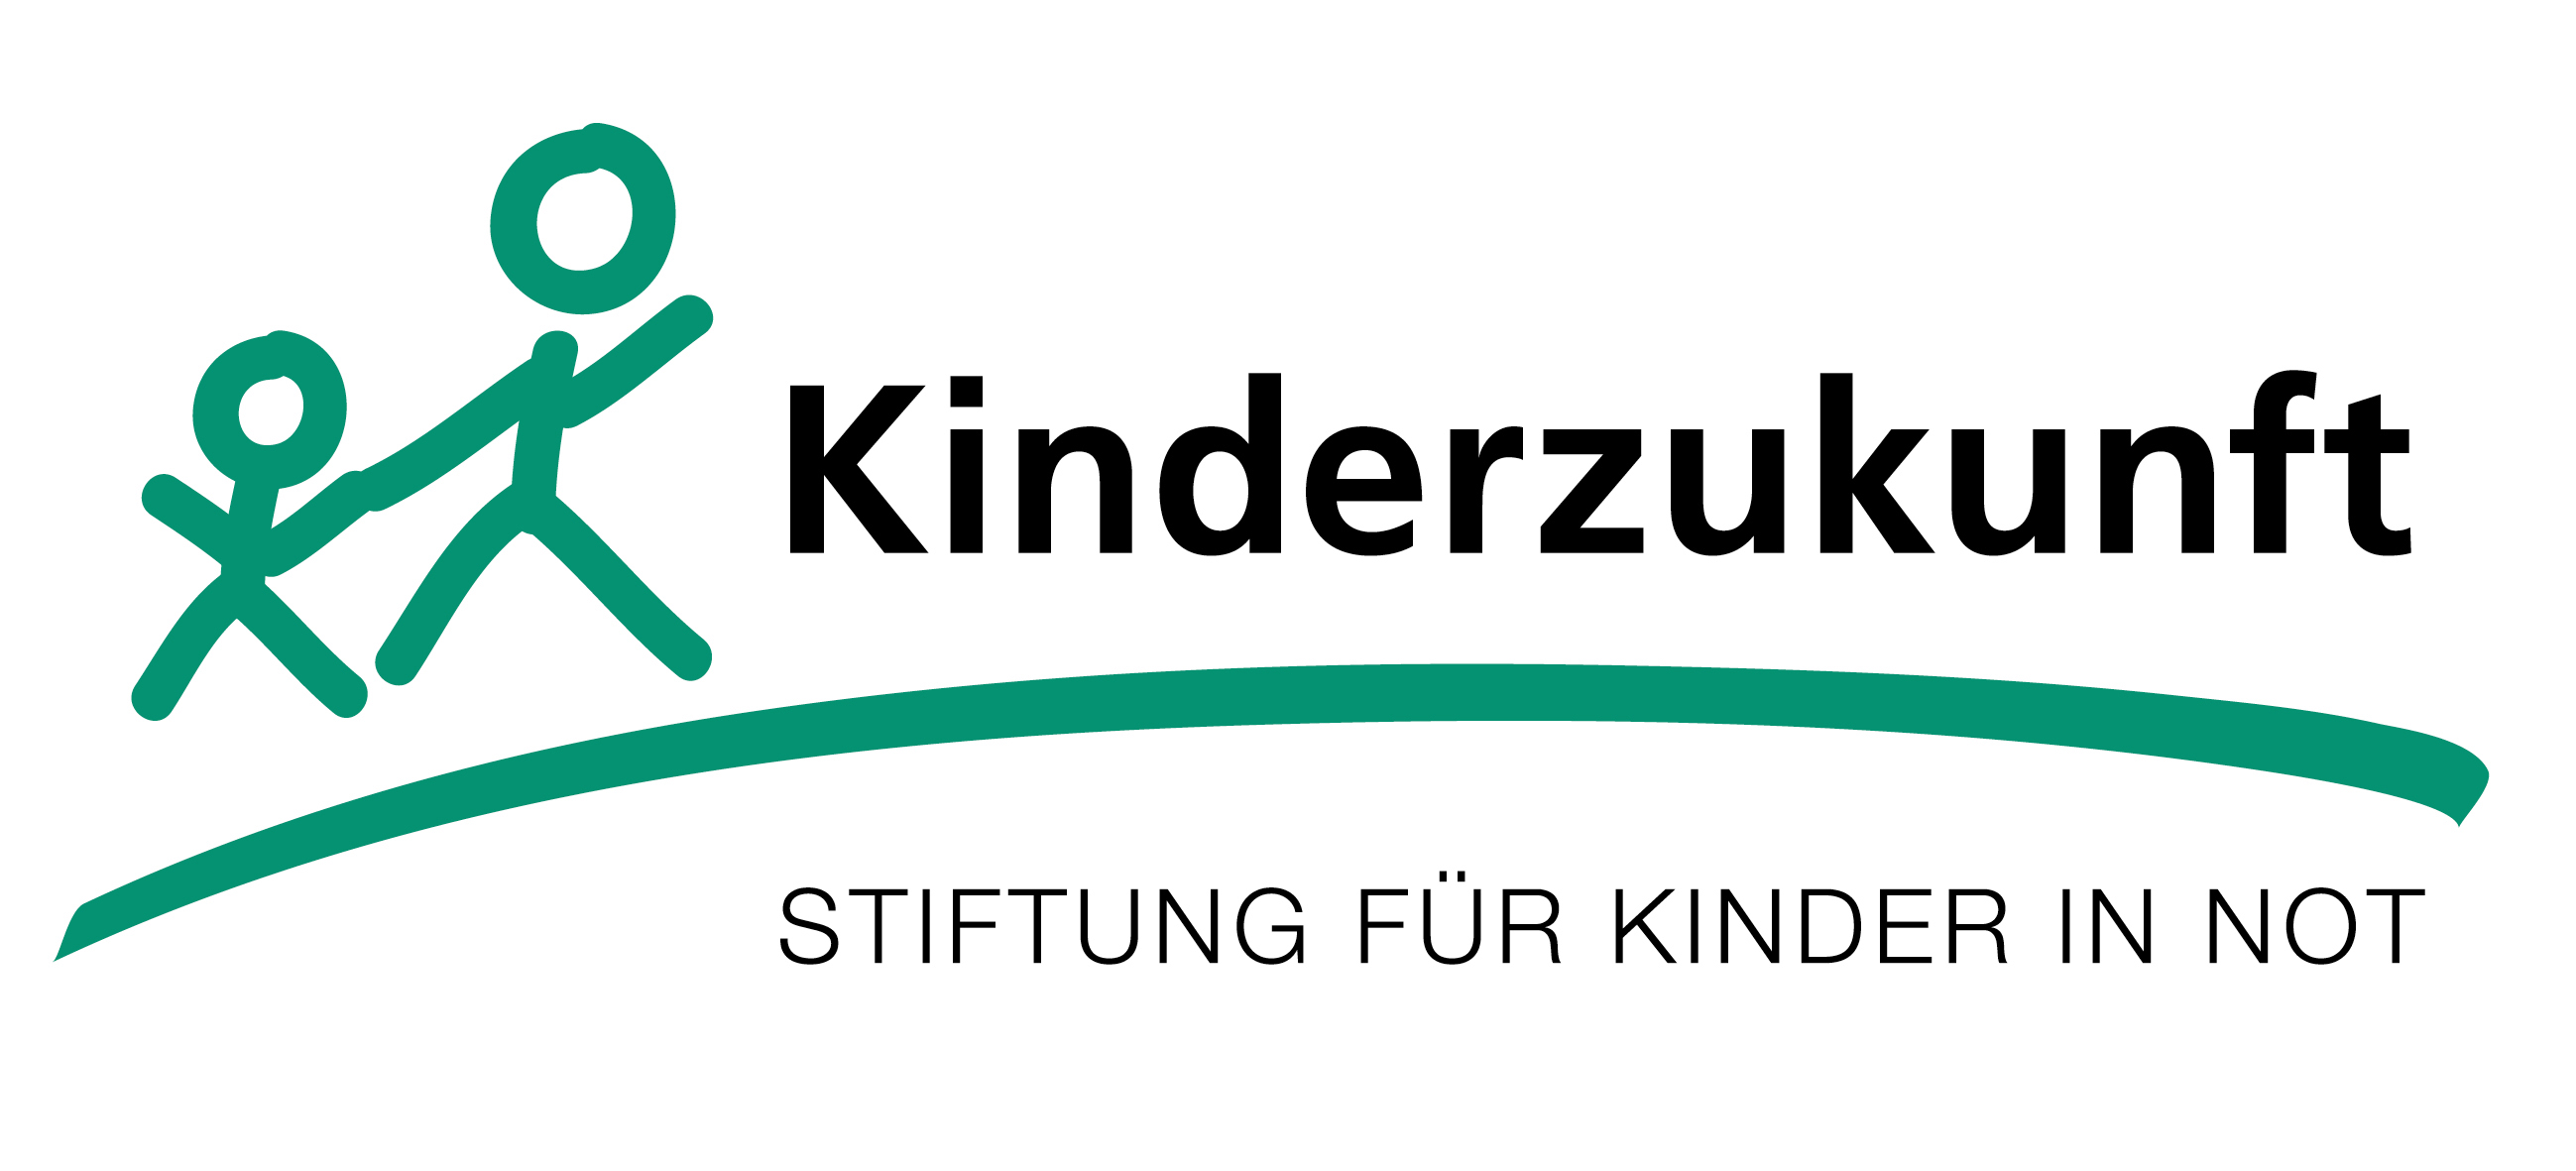 2021 07 02 kinderzukunft logo plus